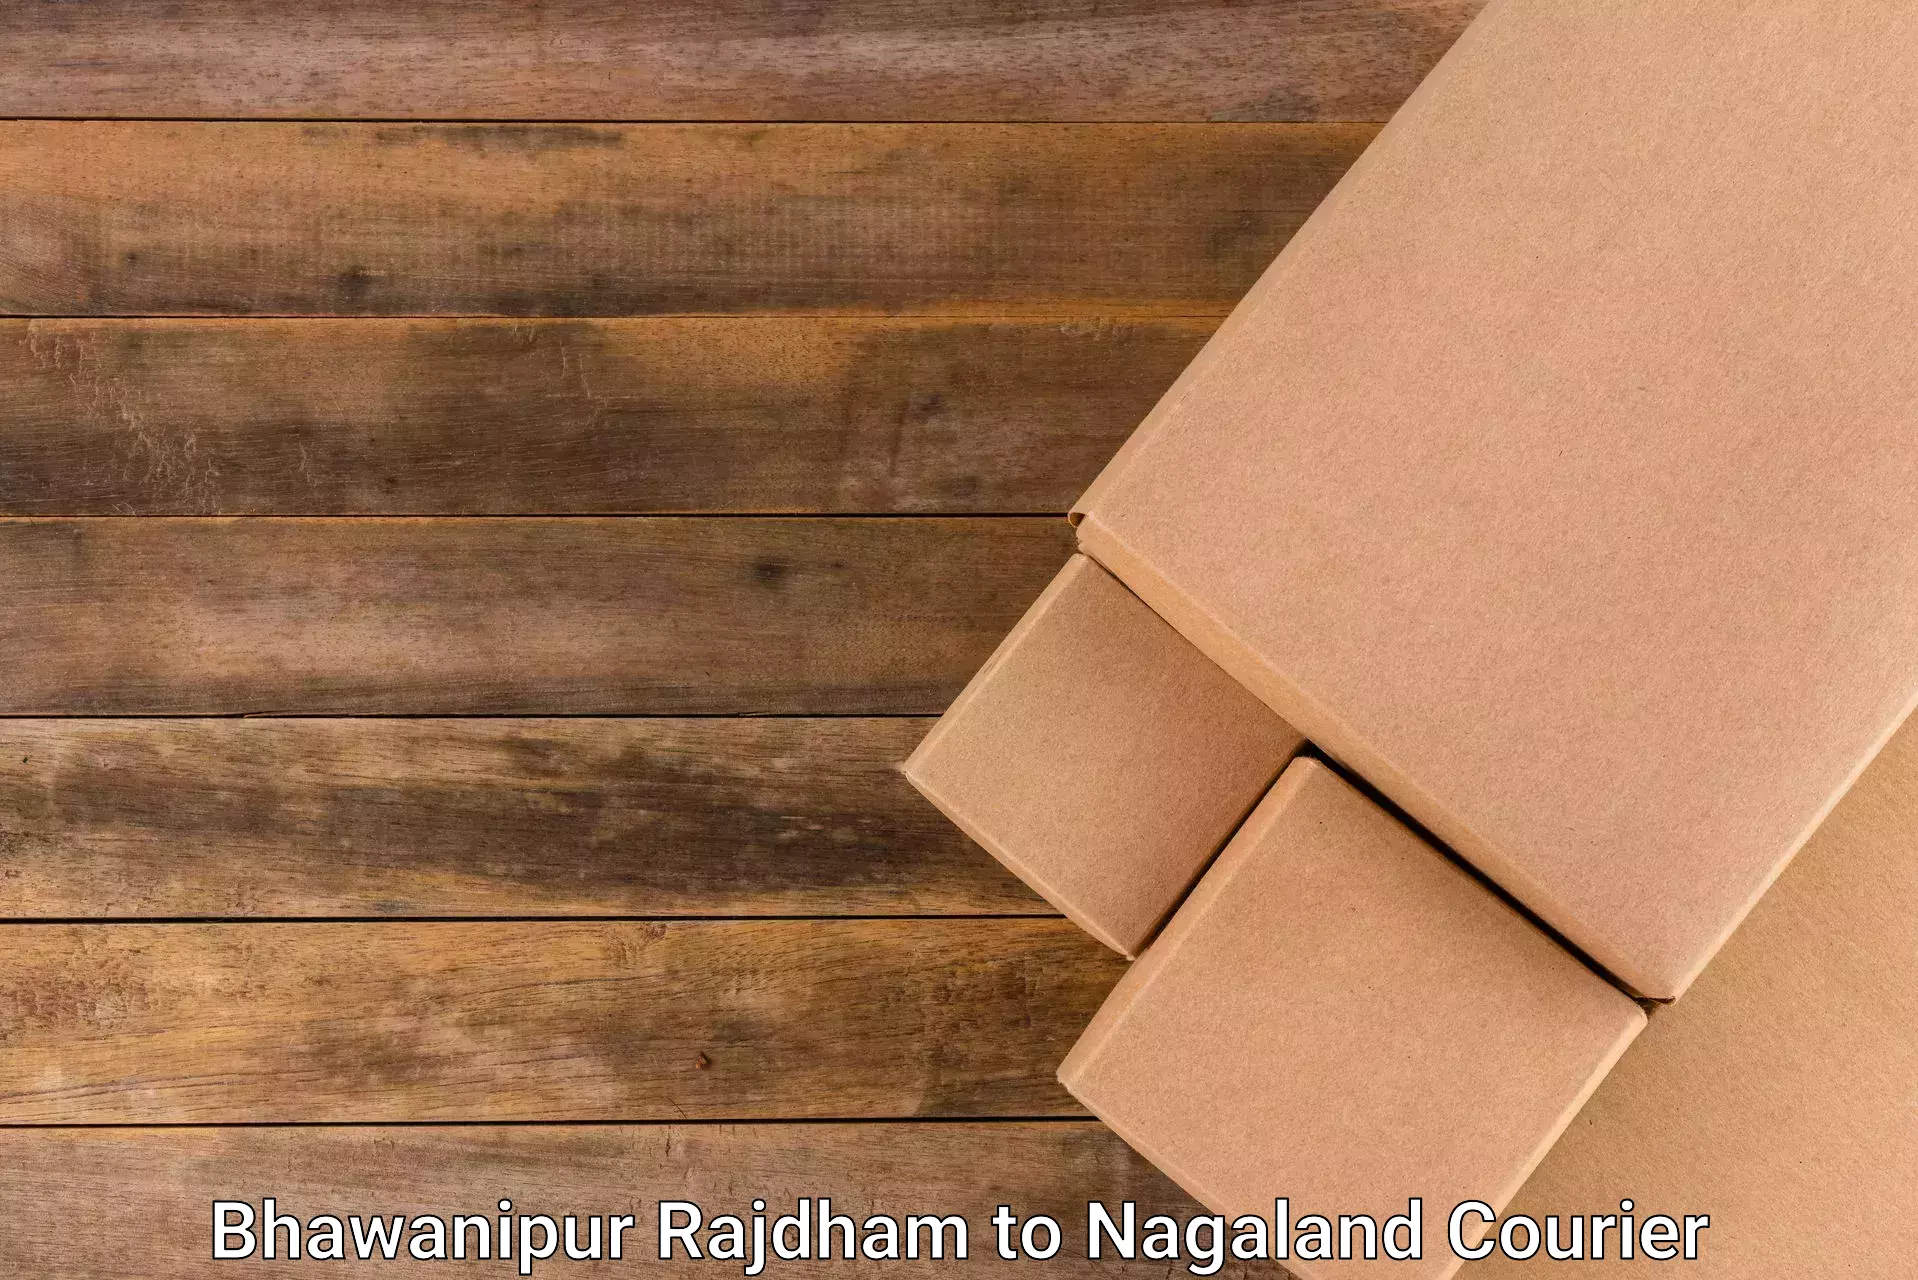 Digital courier platforms Bhawanipur Rajdham to Nagaland